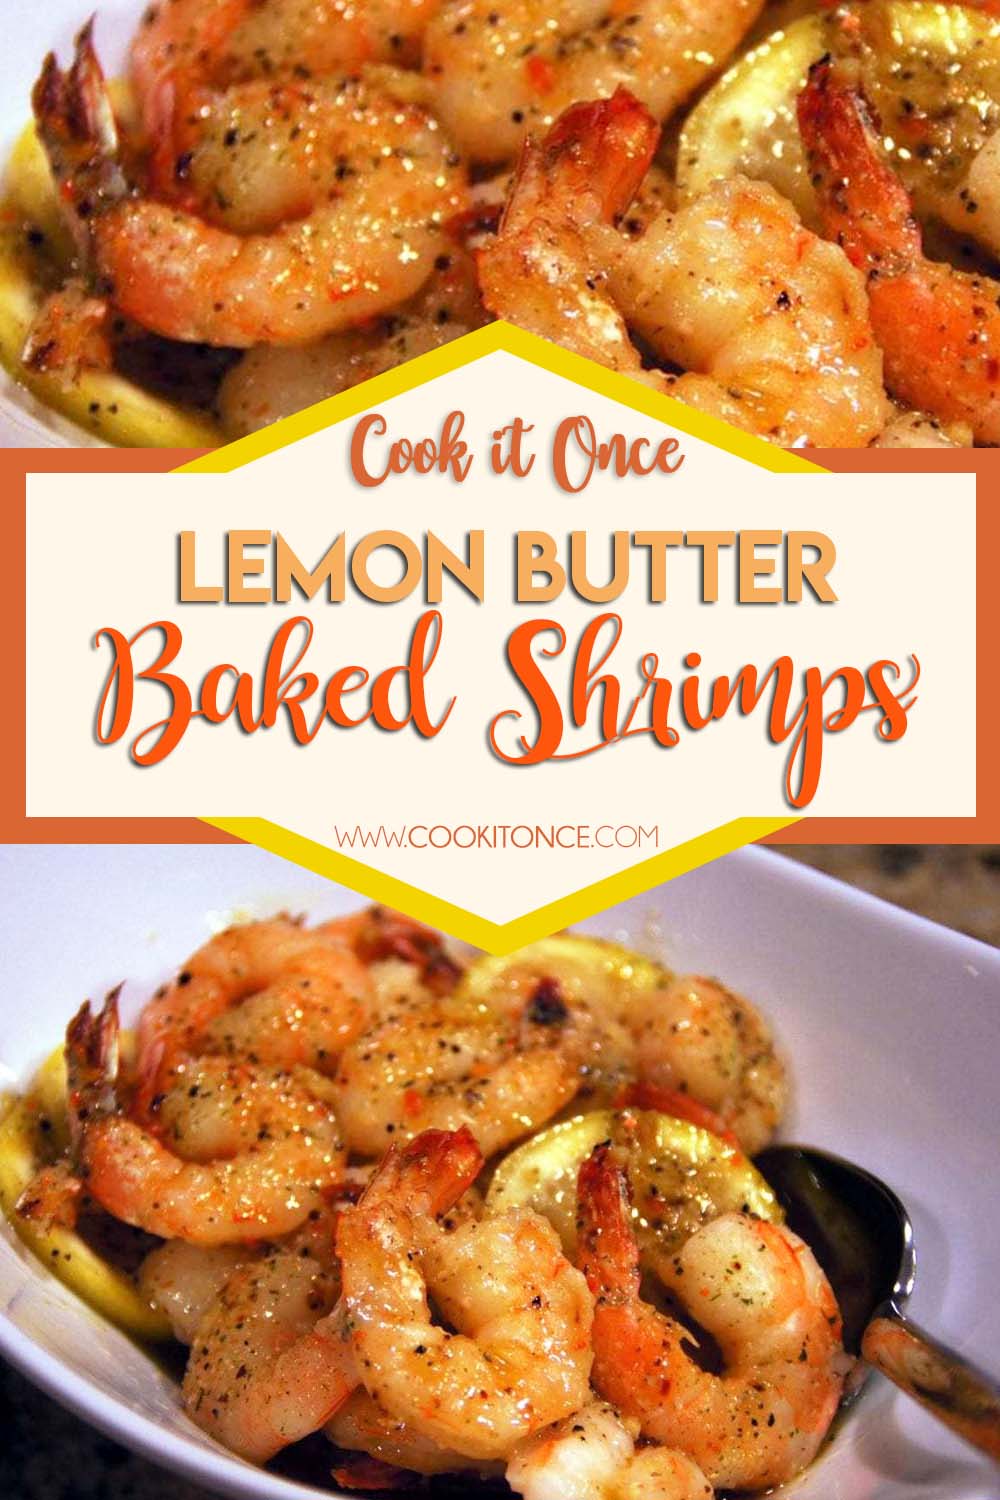 Baked Shrimp Recipe